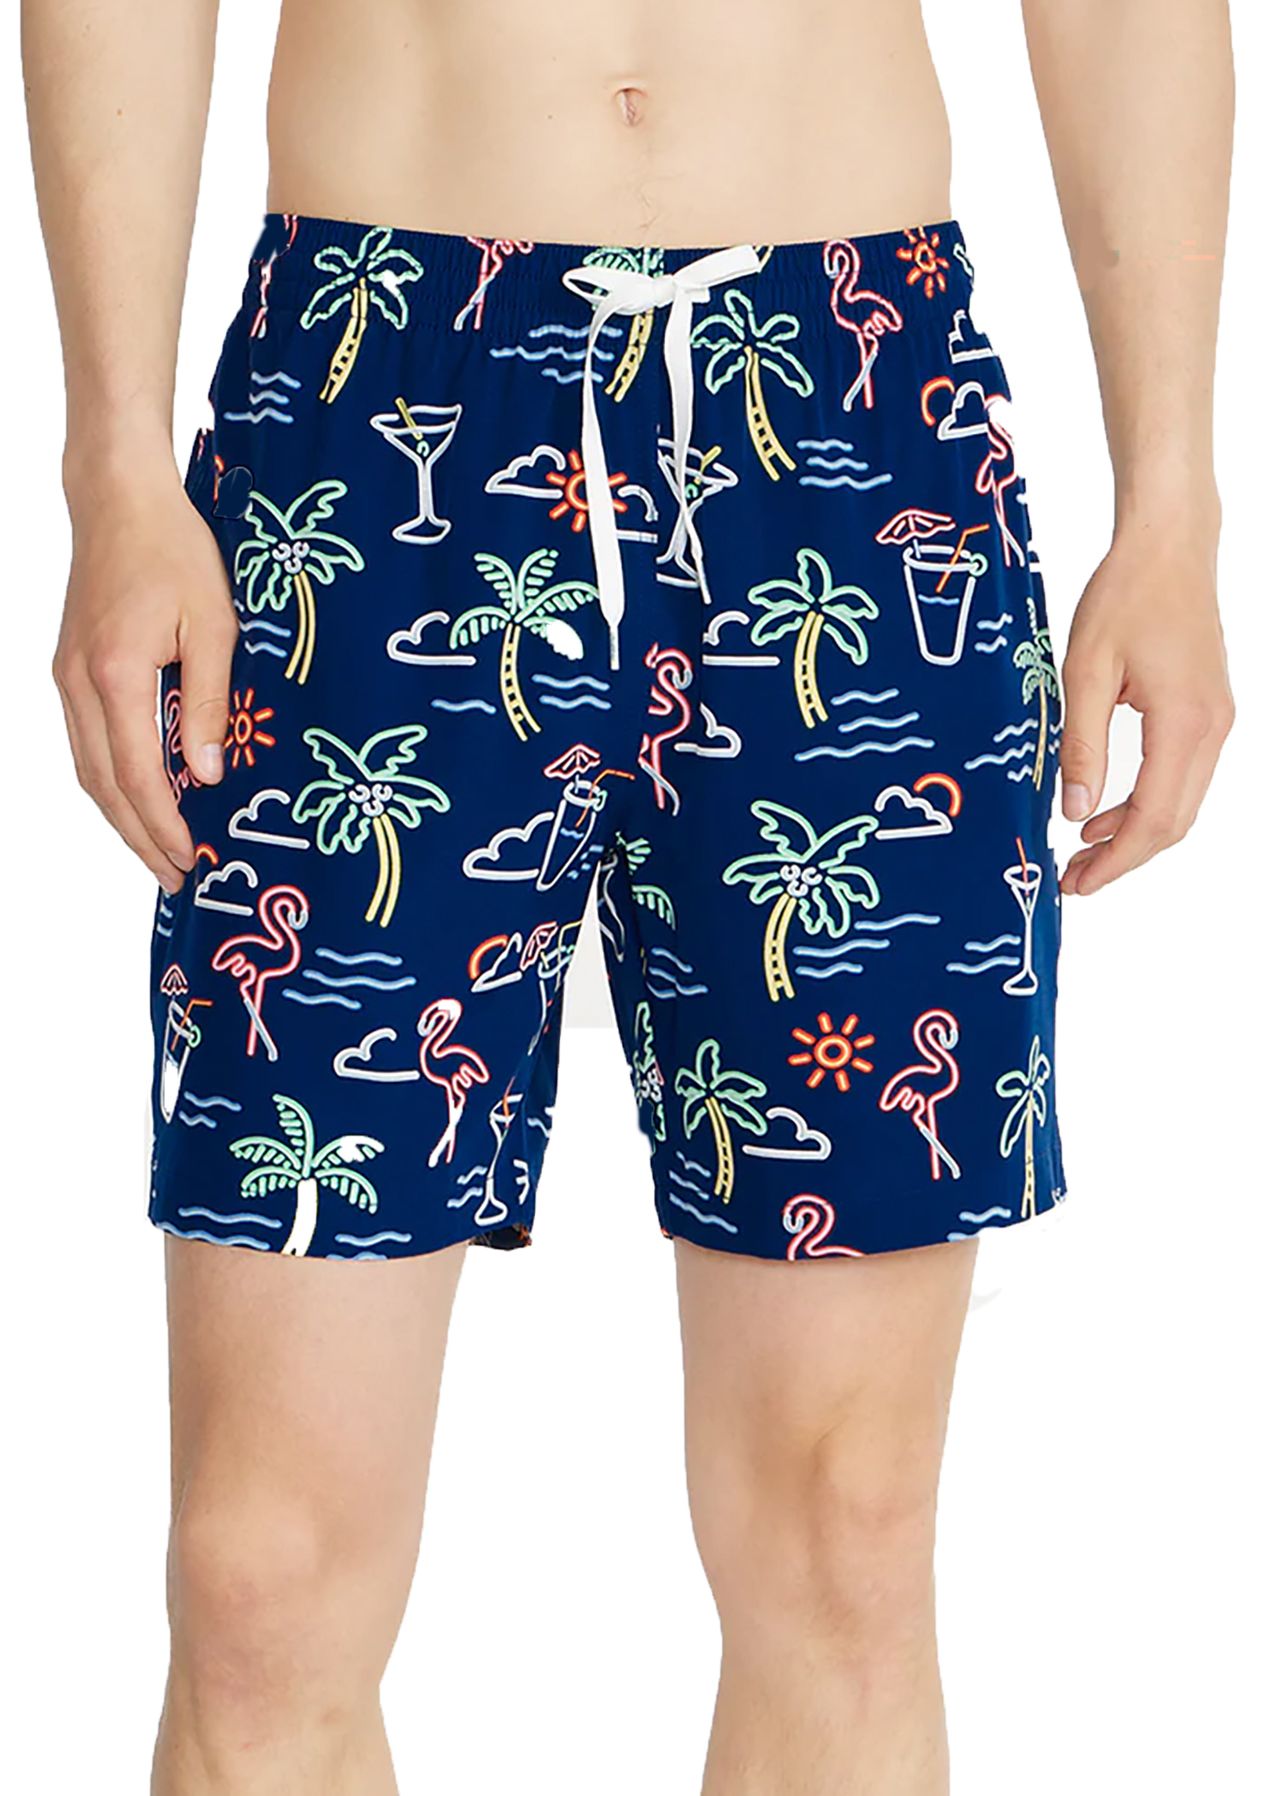 Photos - Swimwear chubbies Men's Classic 7" Swim Trunks, Small, Neon Lights 20HYHMTHNNLGHTS7